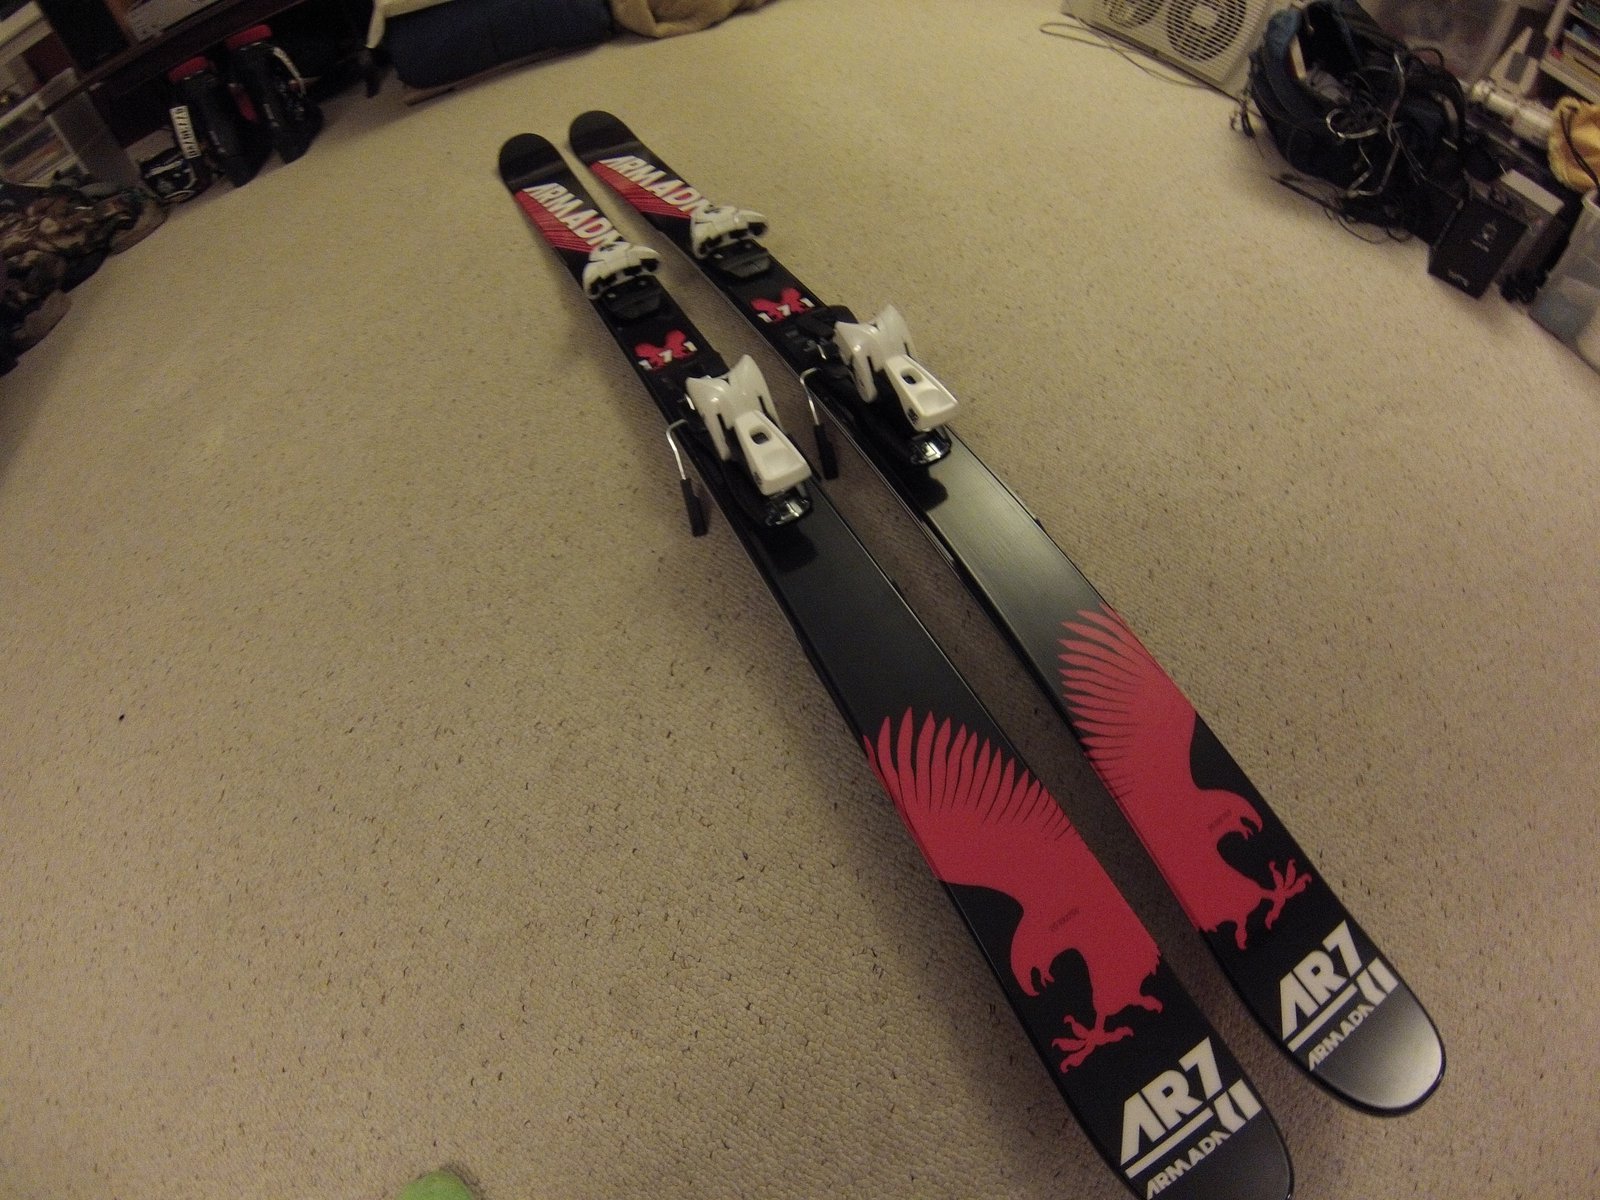 New Skis!